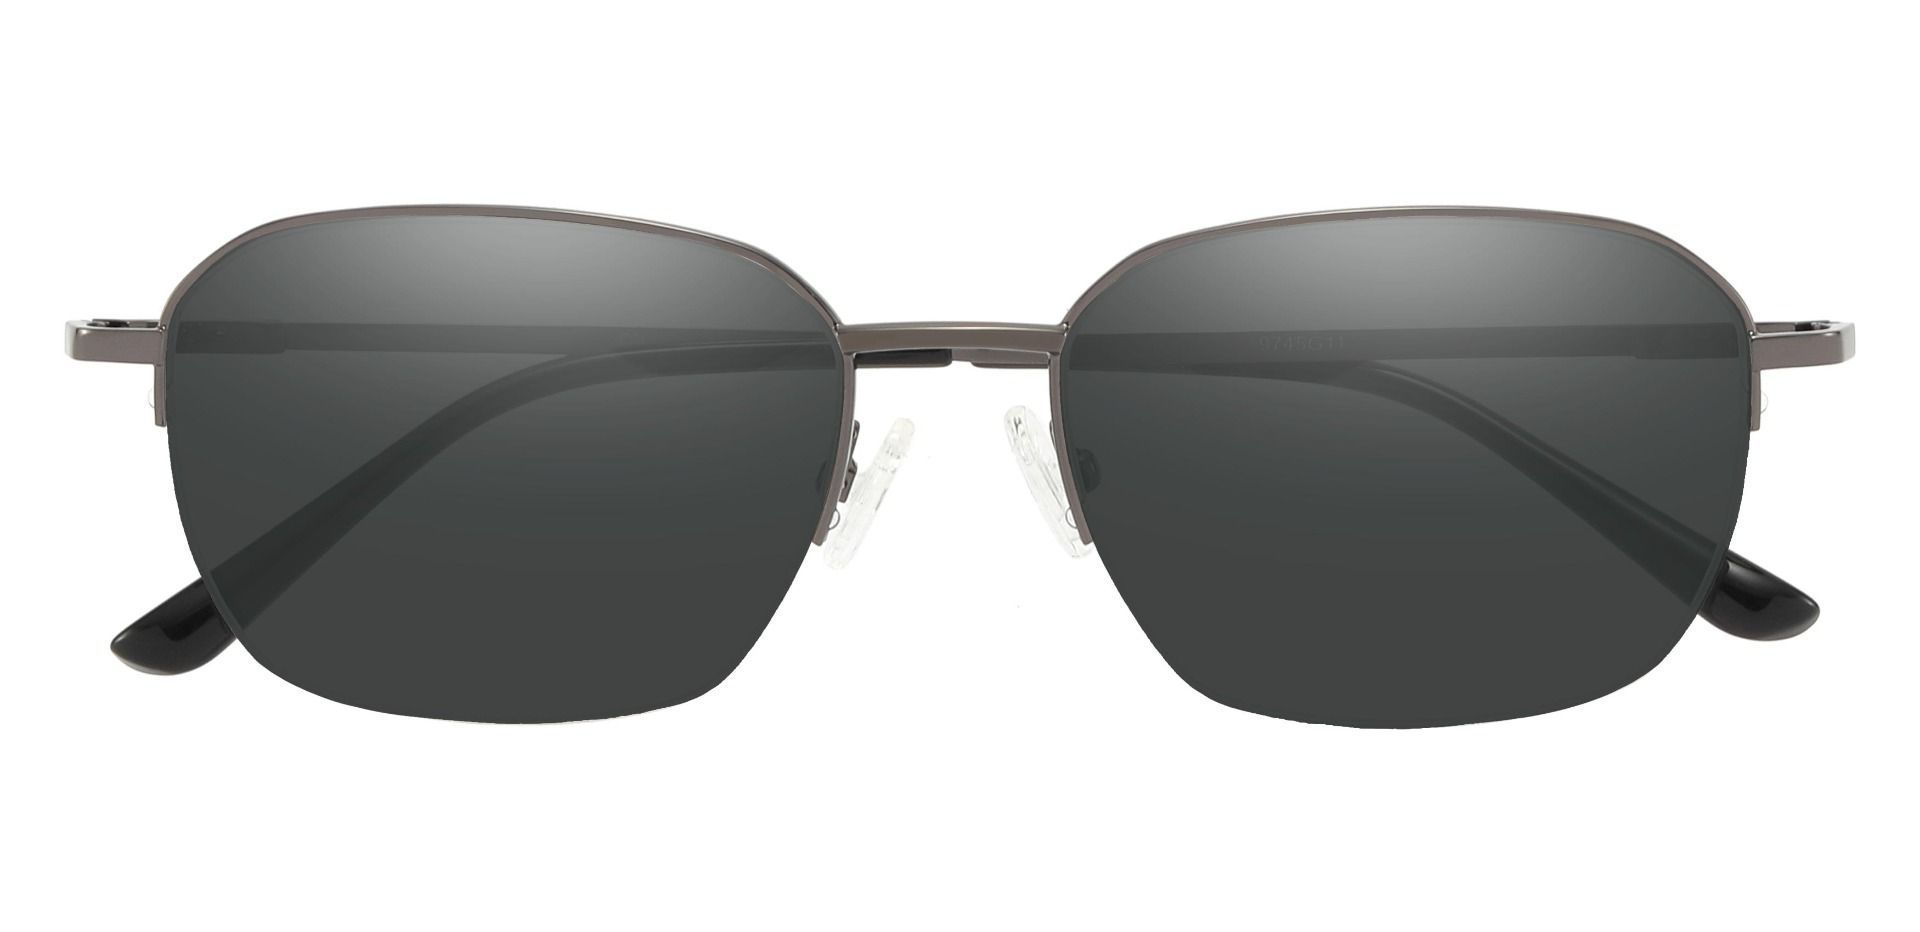 Wilton Geometric Prescription Sunglasses - Gray Frame With Gray Lenses